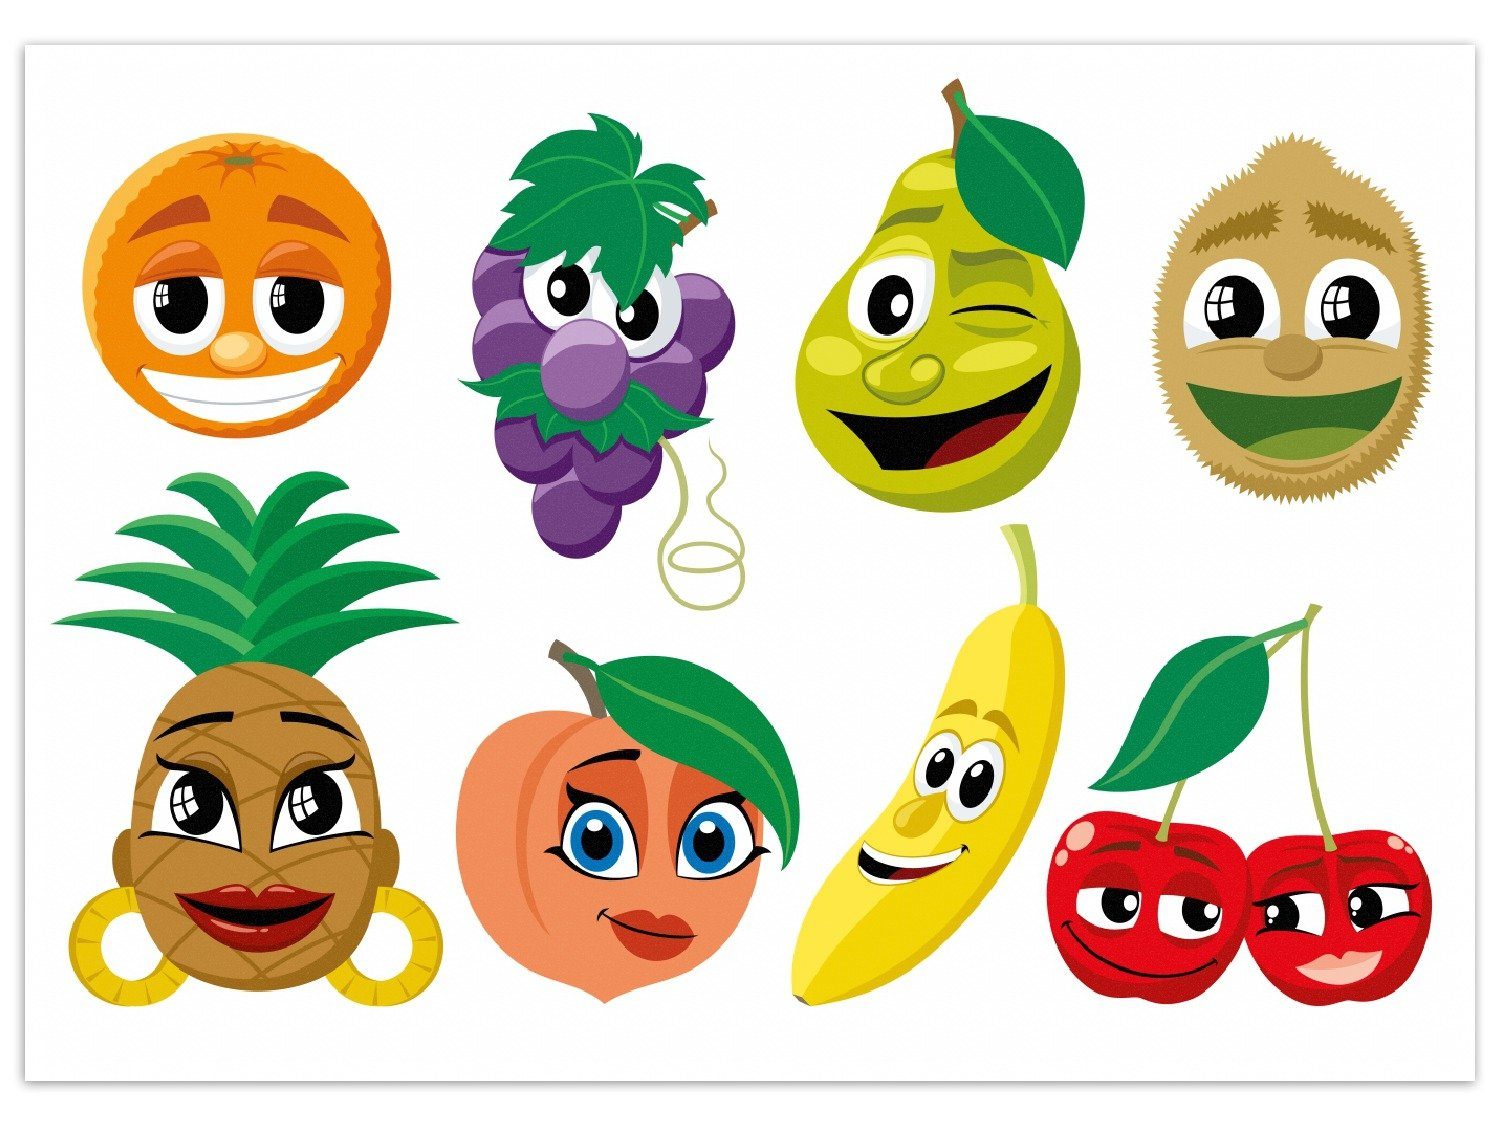 Wandbild aus Acryl Obst-Smilies im Comic-Stil - Lustige Früchte